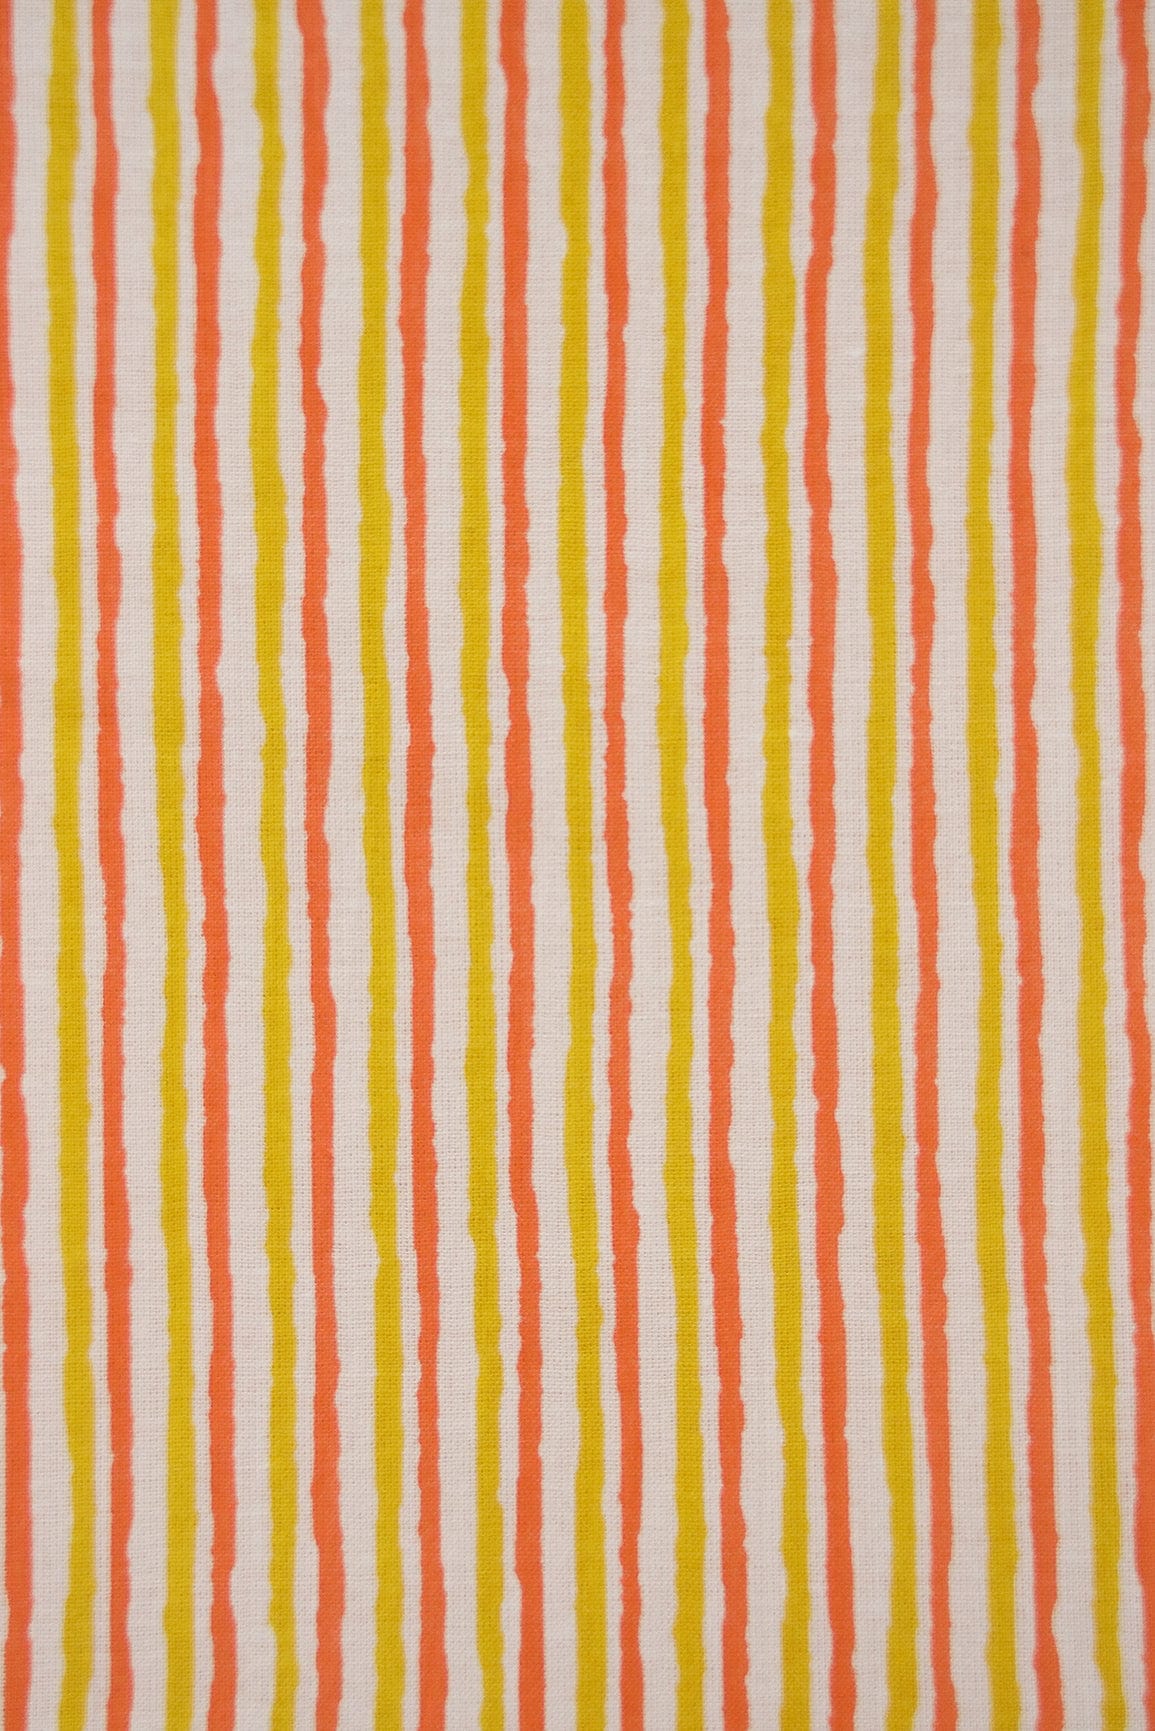 doeraa Prints Yellow and Orange Stripes Screen Print on organic Cotton Fabric